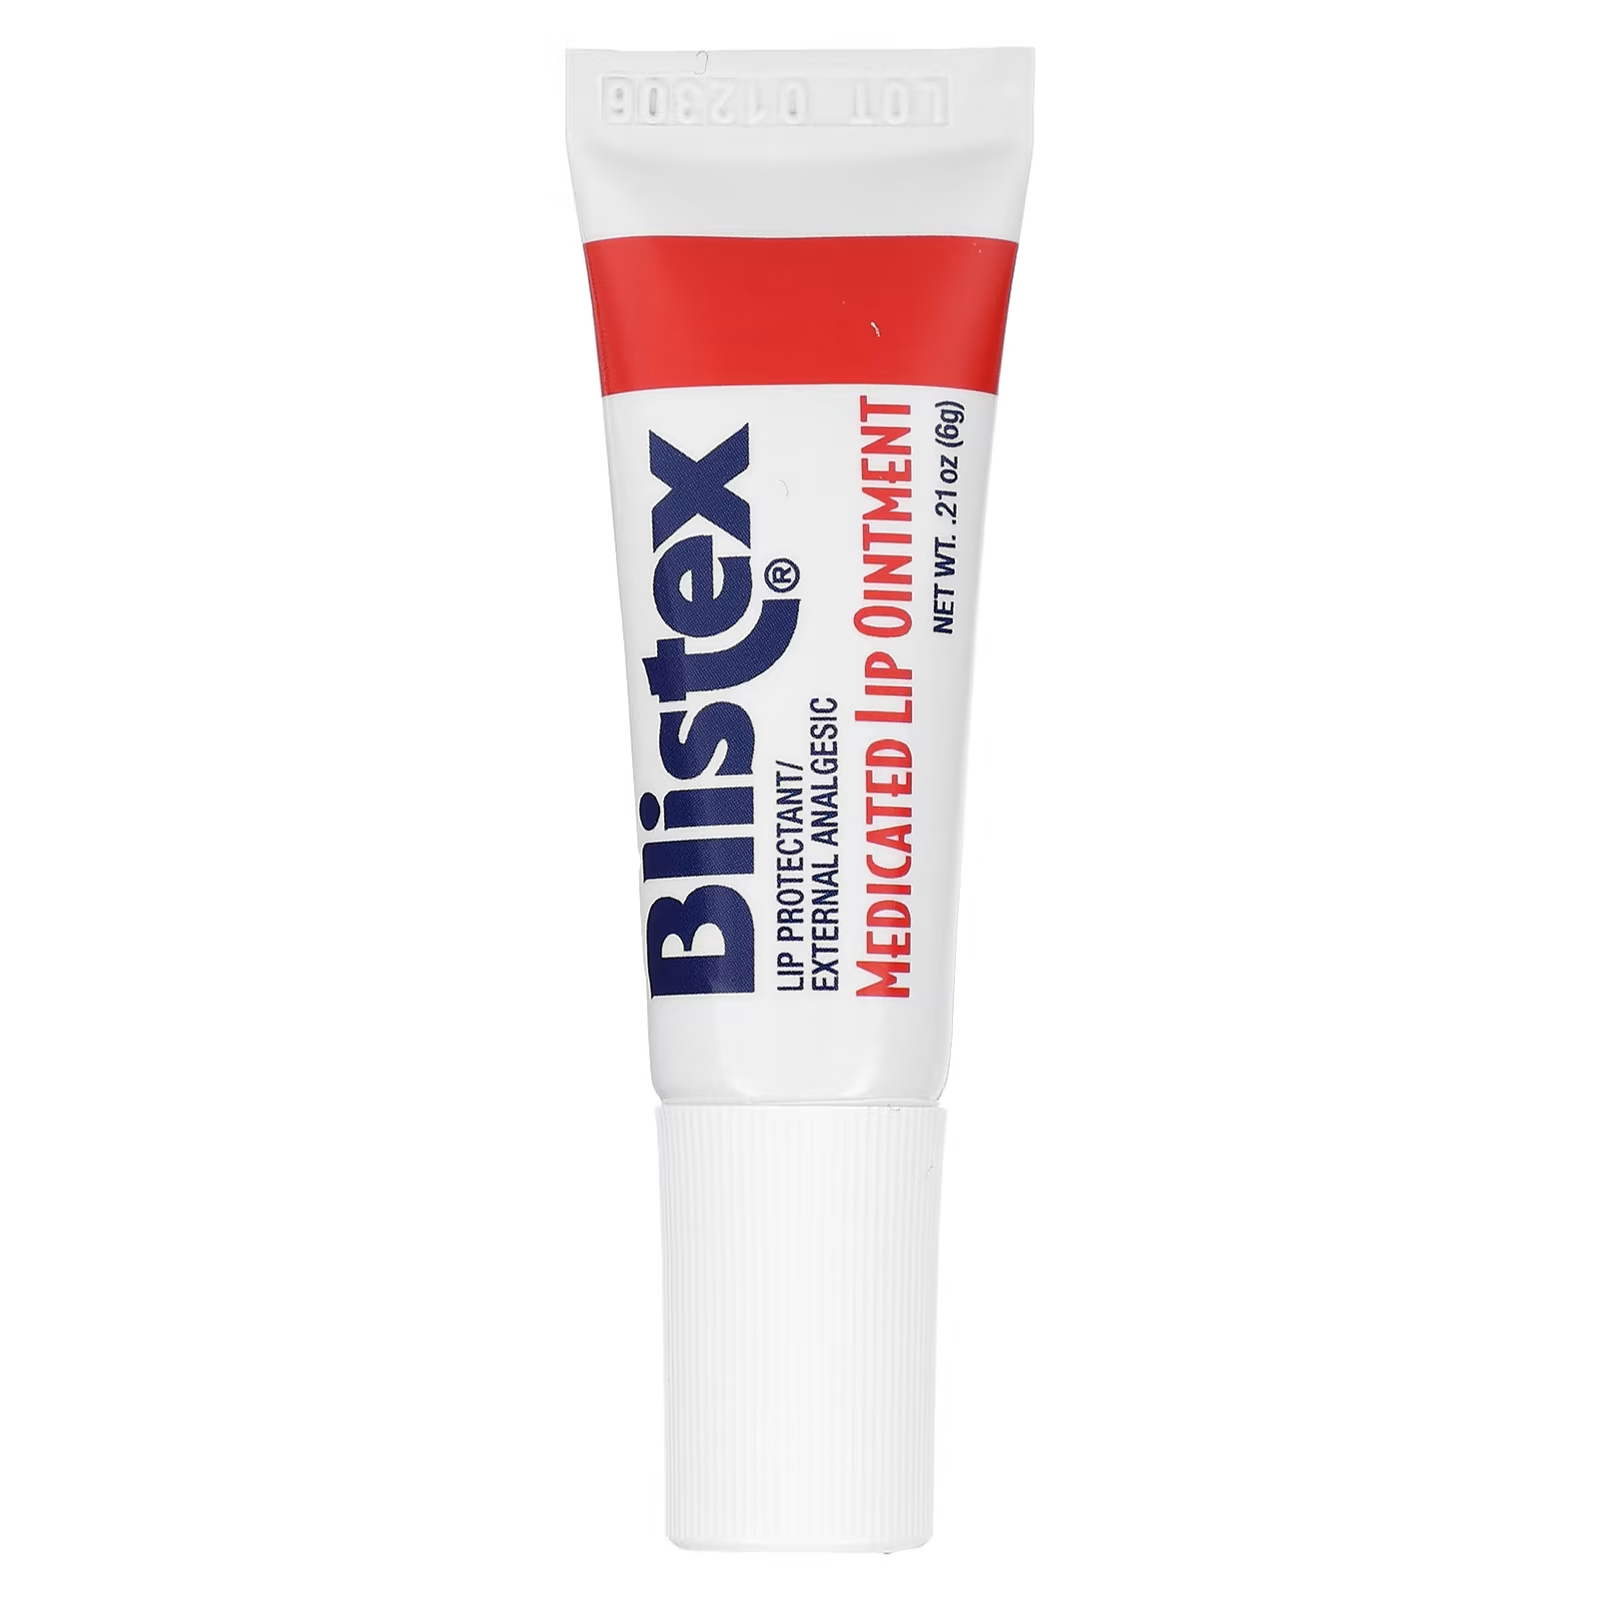 Лечебная мазь для губ Blistex, 0,21 унции (6 г) цена и фото